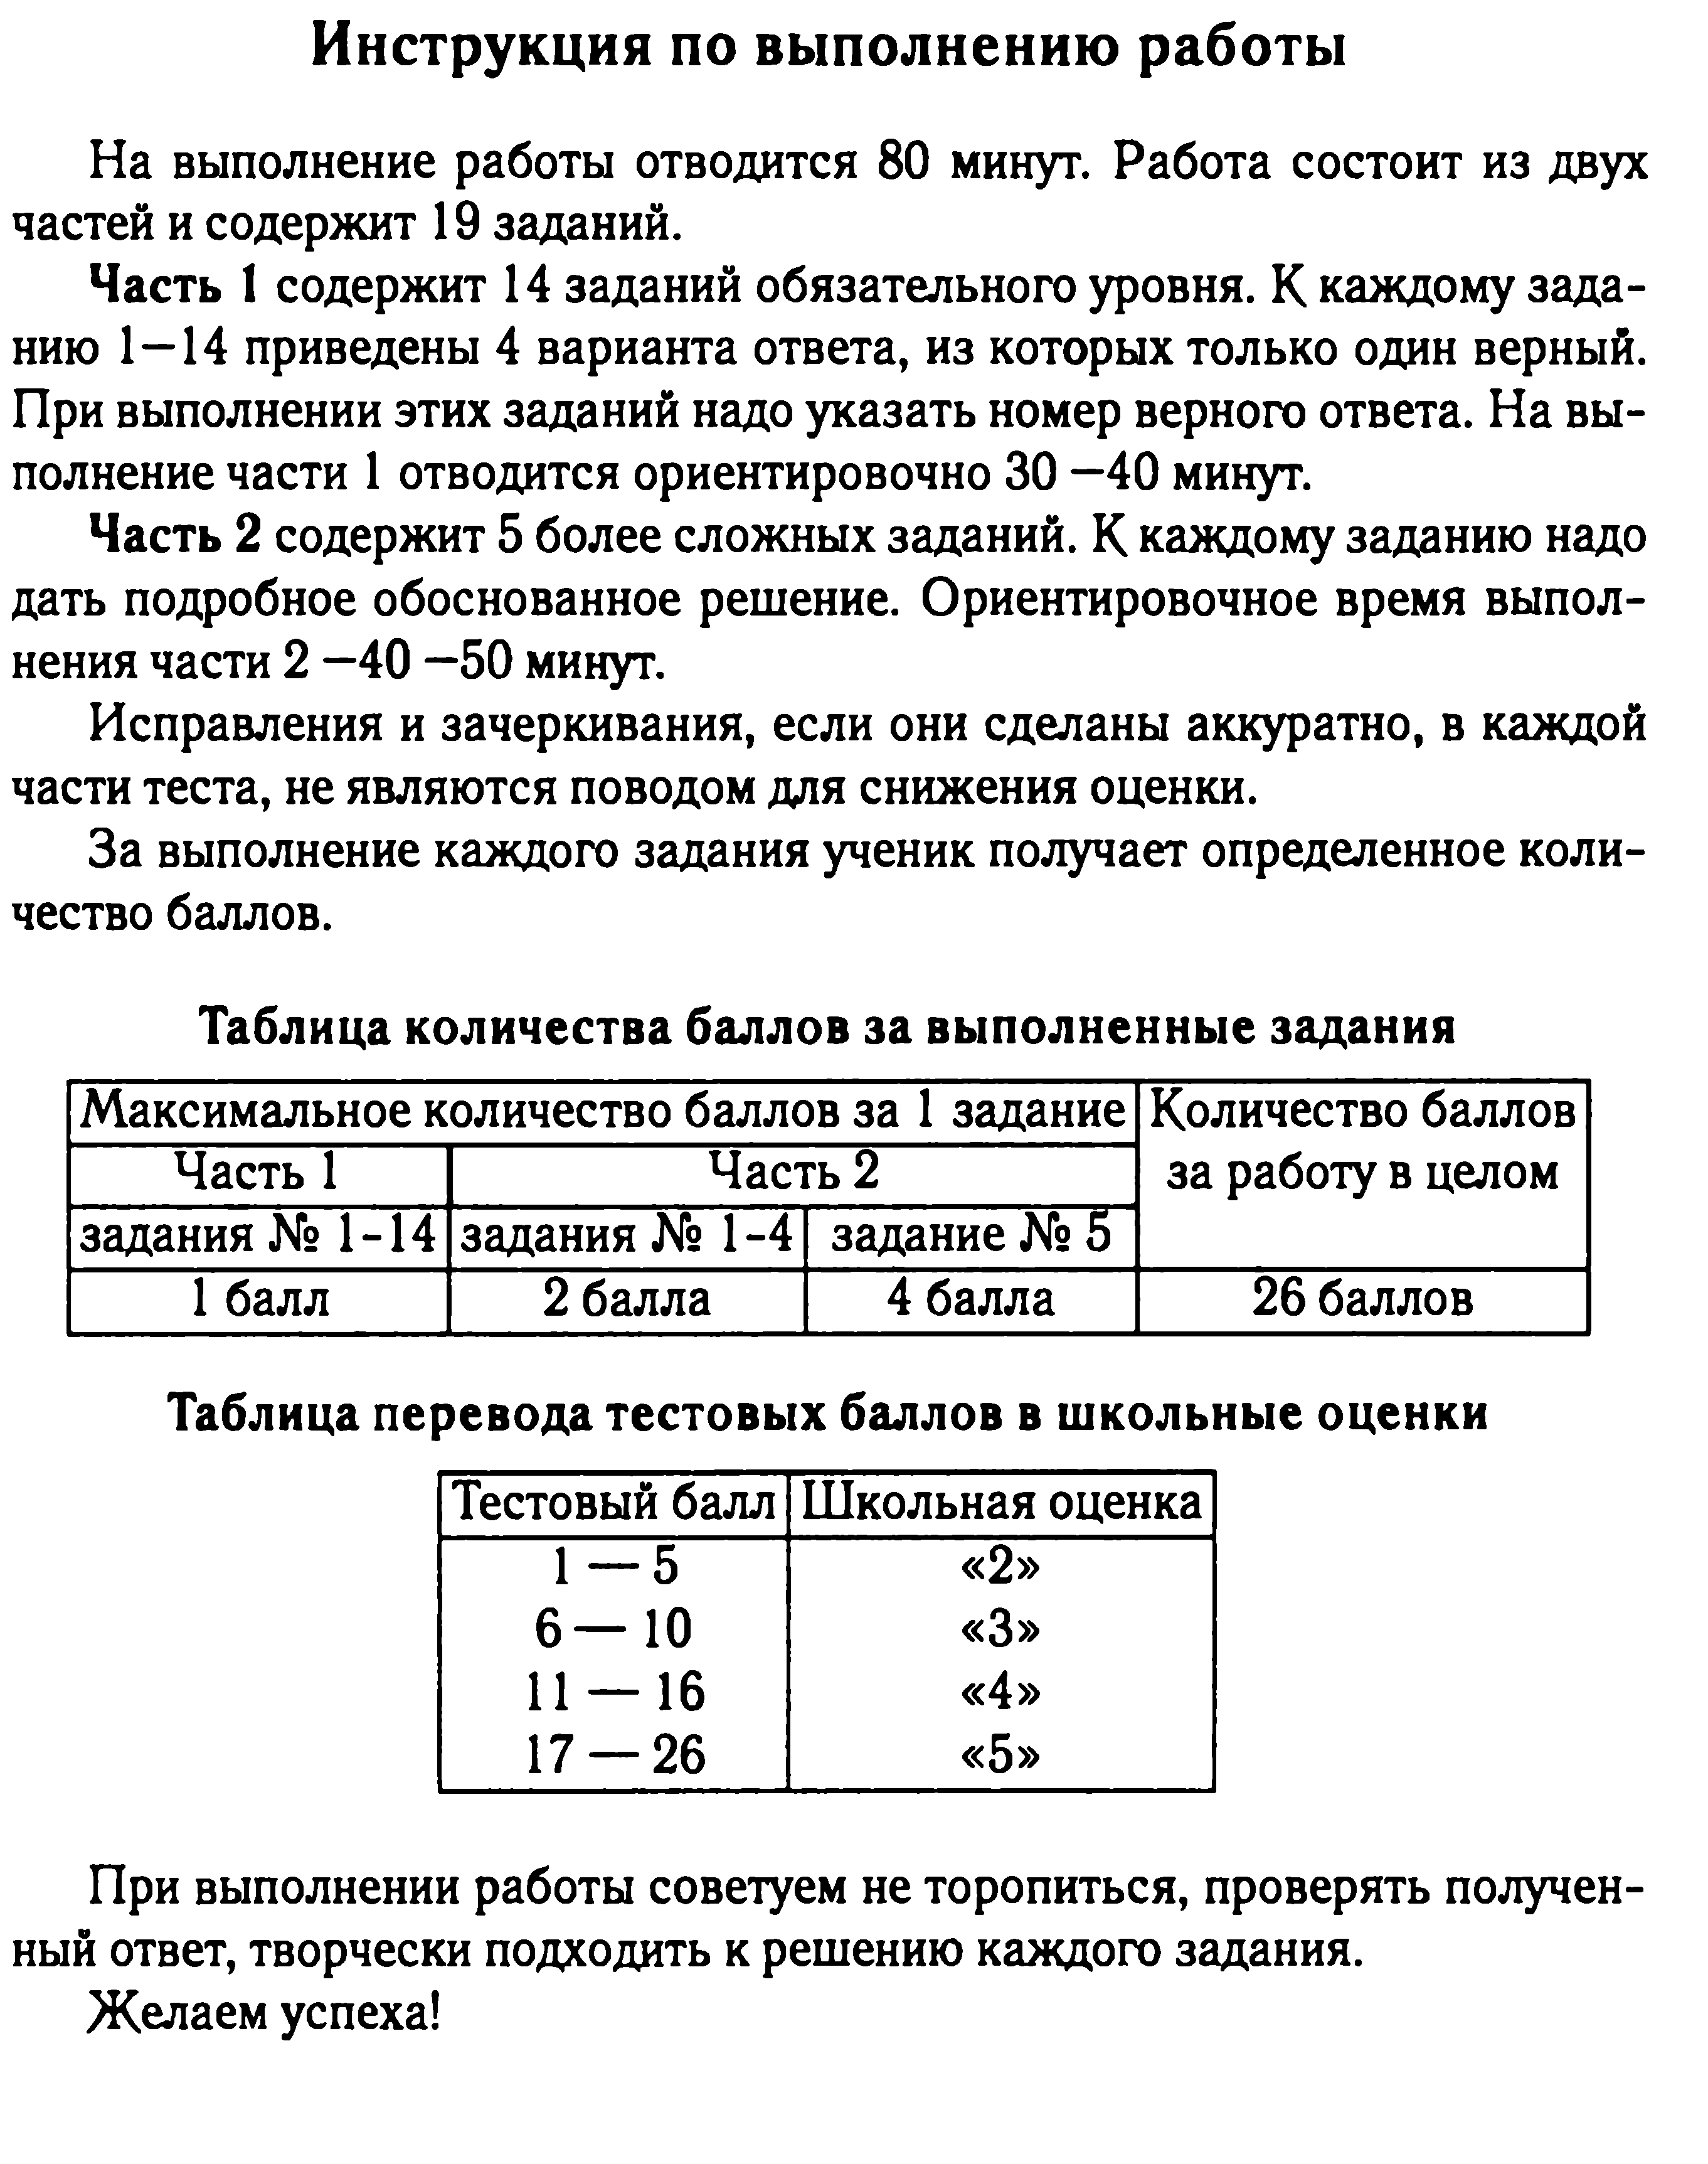 Рабочая программа по математике 6 класс.к УМК И.И.Зубарева, И.И.Мордкович.